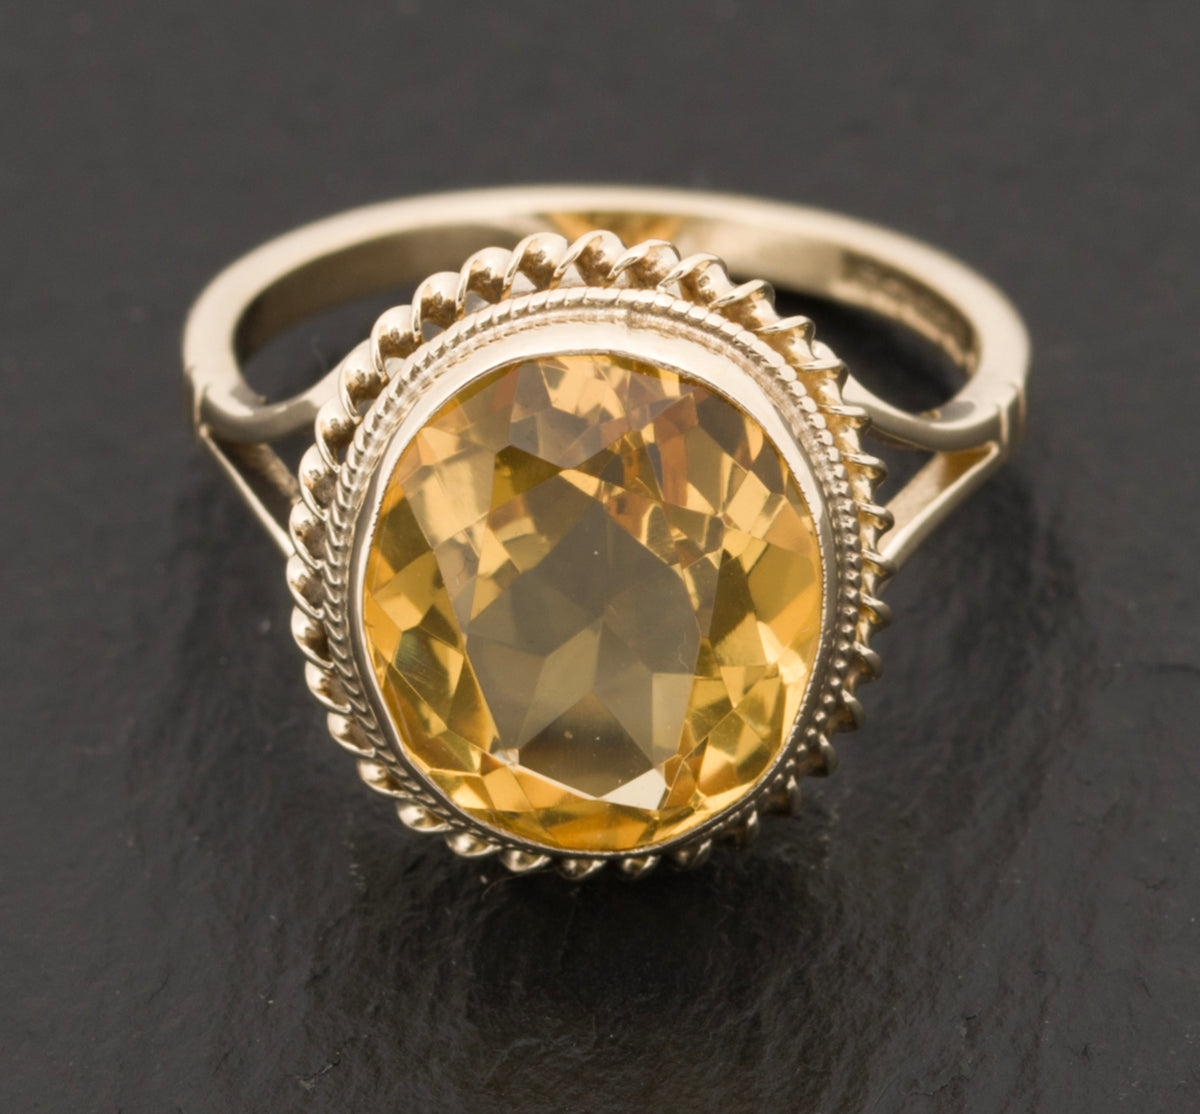 Vintage 9ct Gold Natural Citrine Gemstone Ring 4 Carat Gem 1978 Hallmark (A1525)